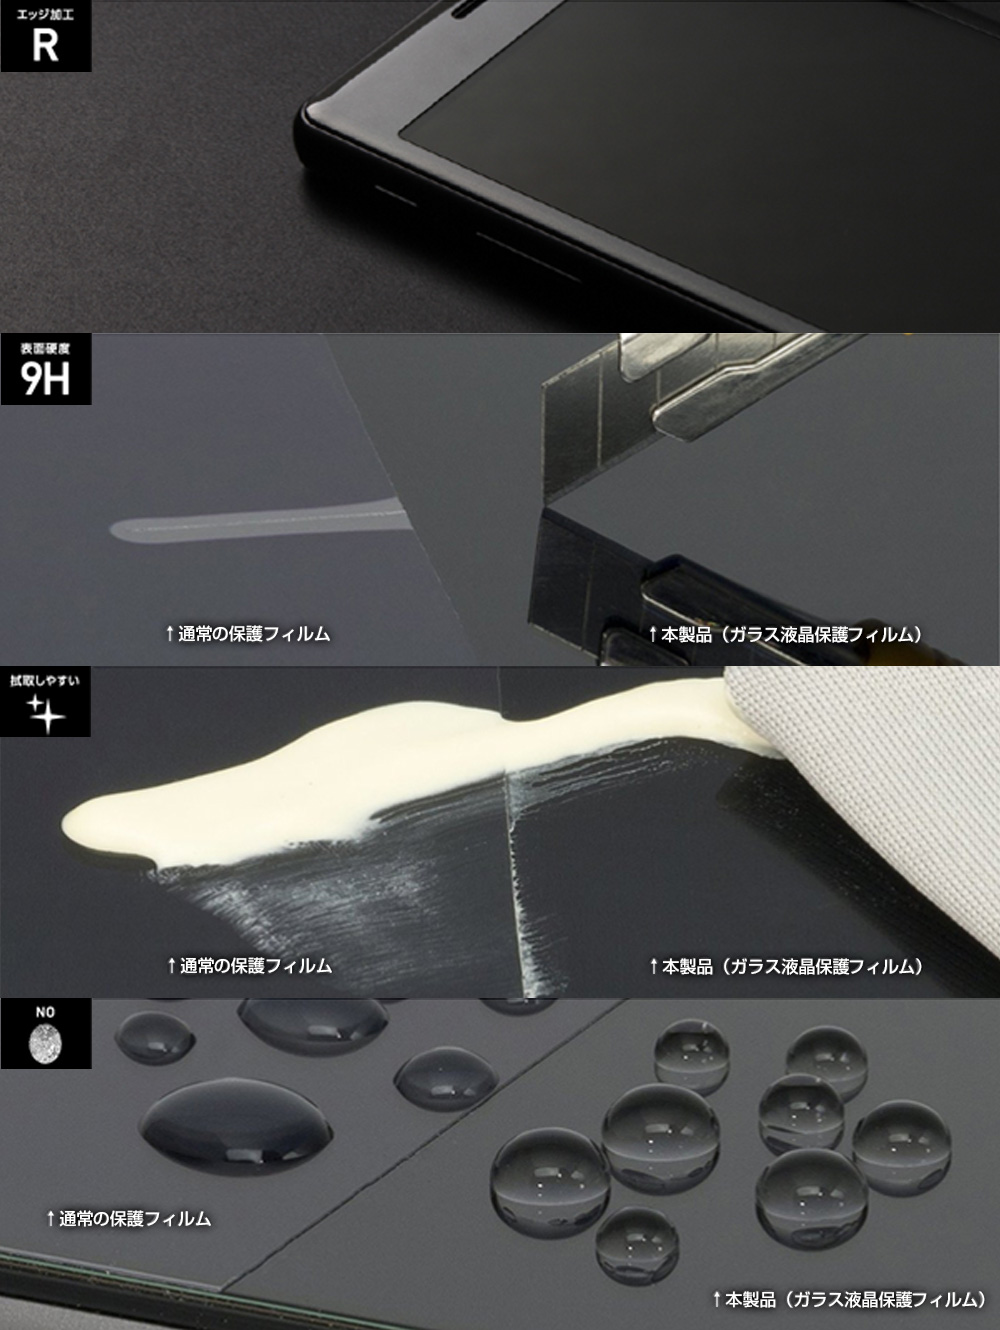 High Grade Glass Screen Protector ϥ졼ɥ饹 for iPhone 13 Pro / iPhone 13 ޥå